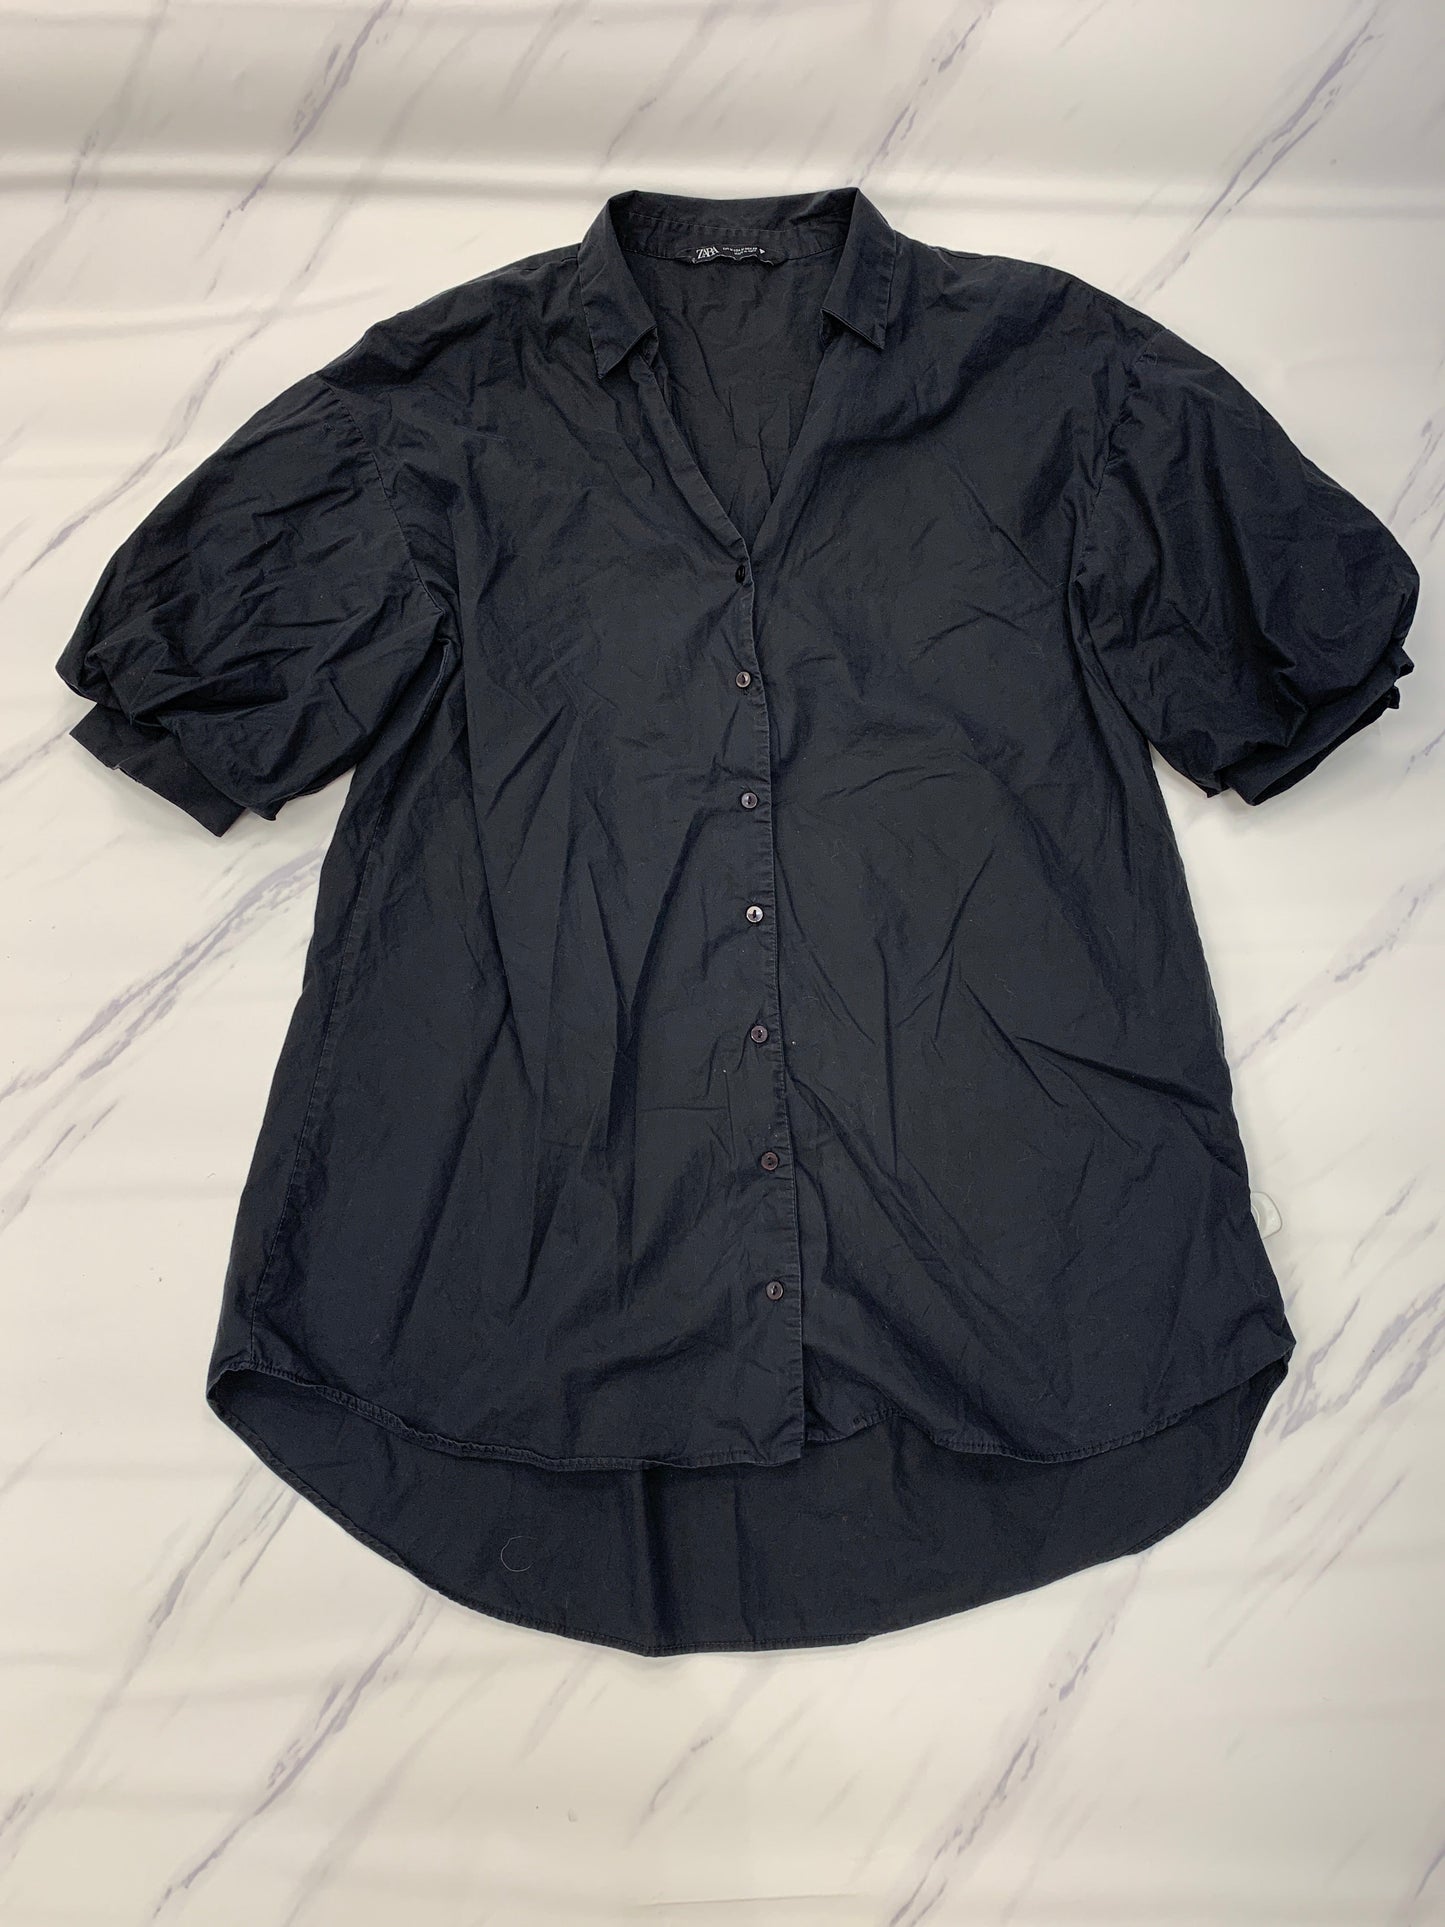 Black Top Long Sleeve Zara, Size M